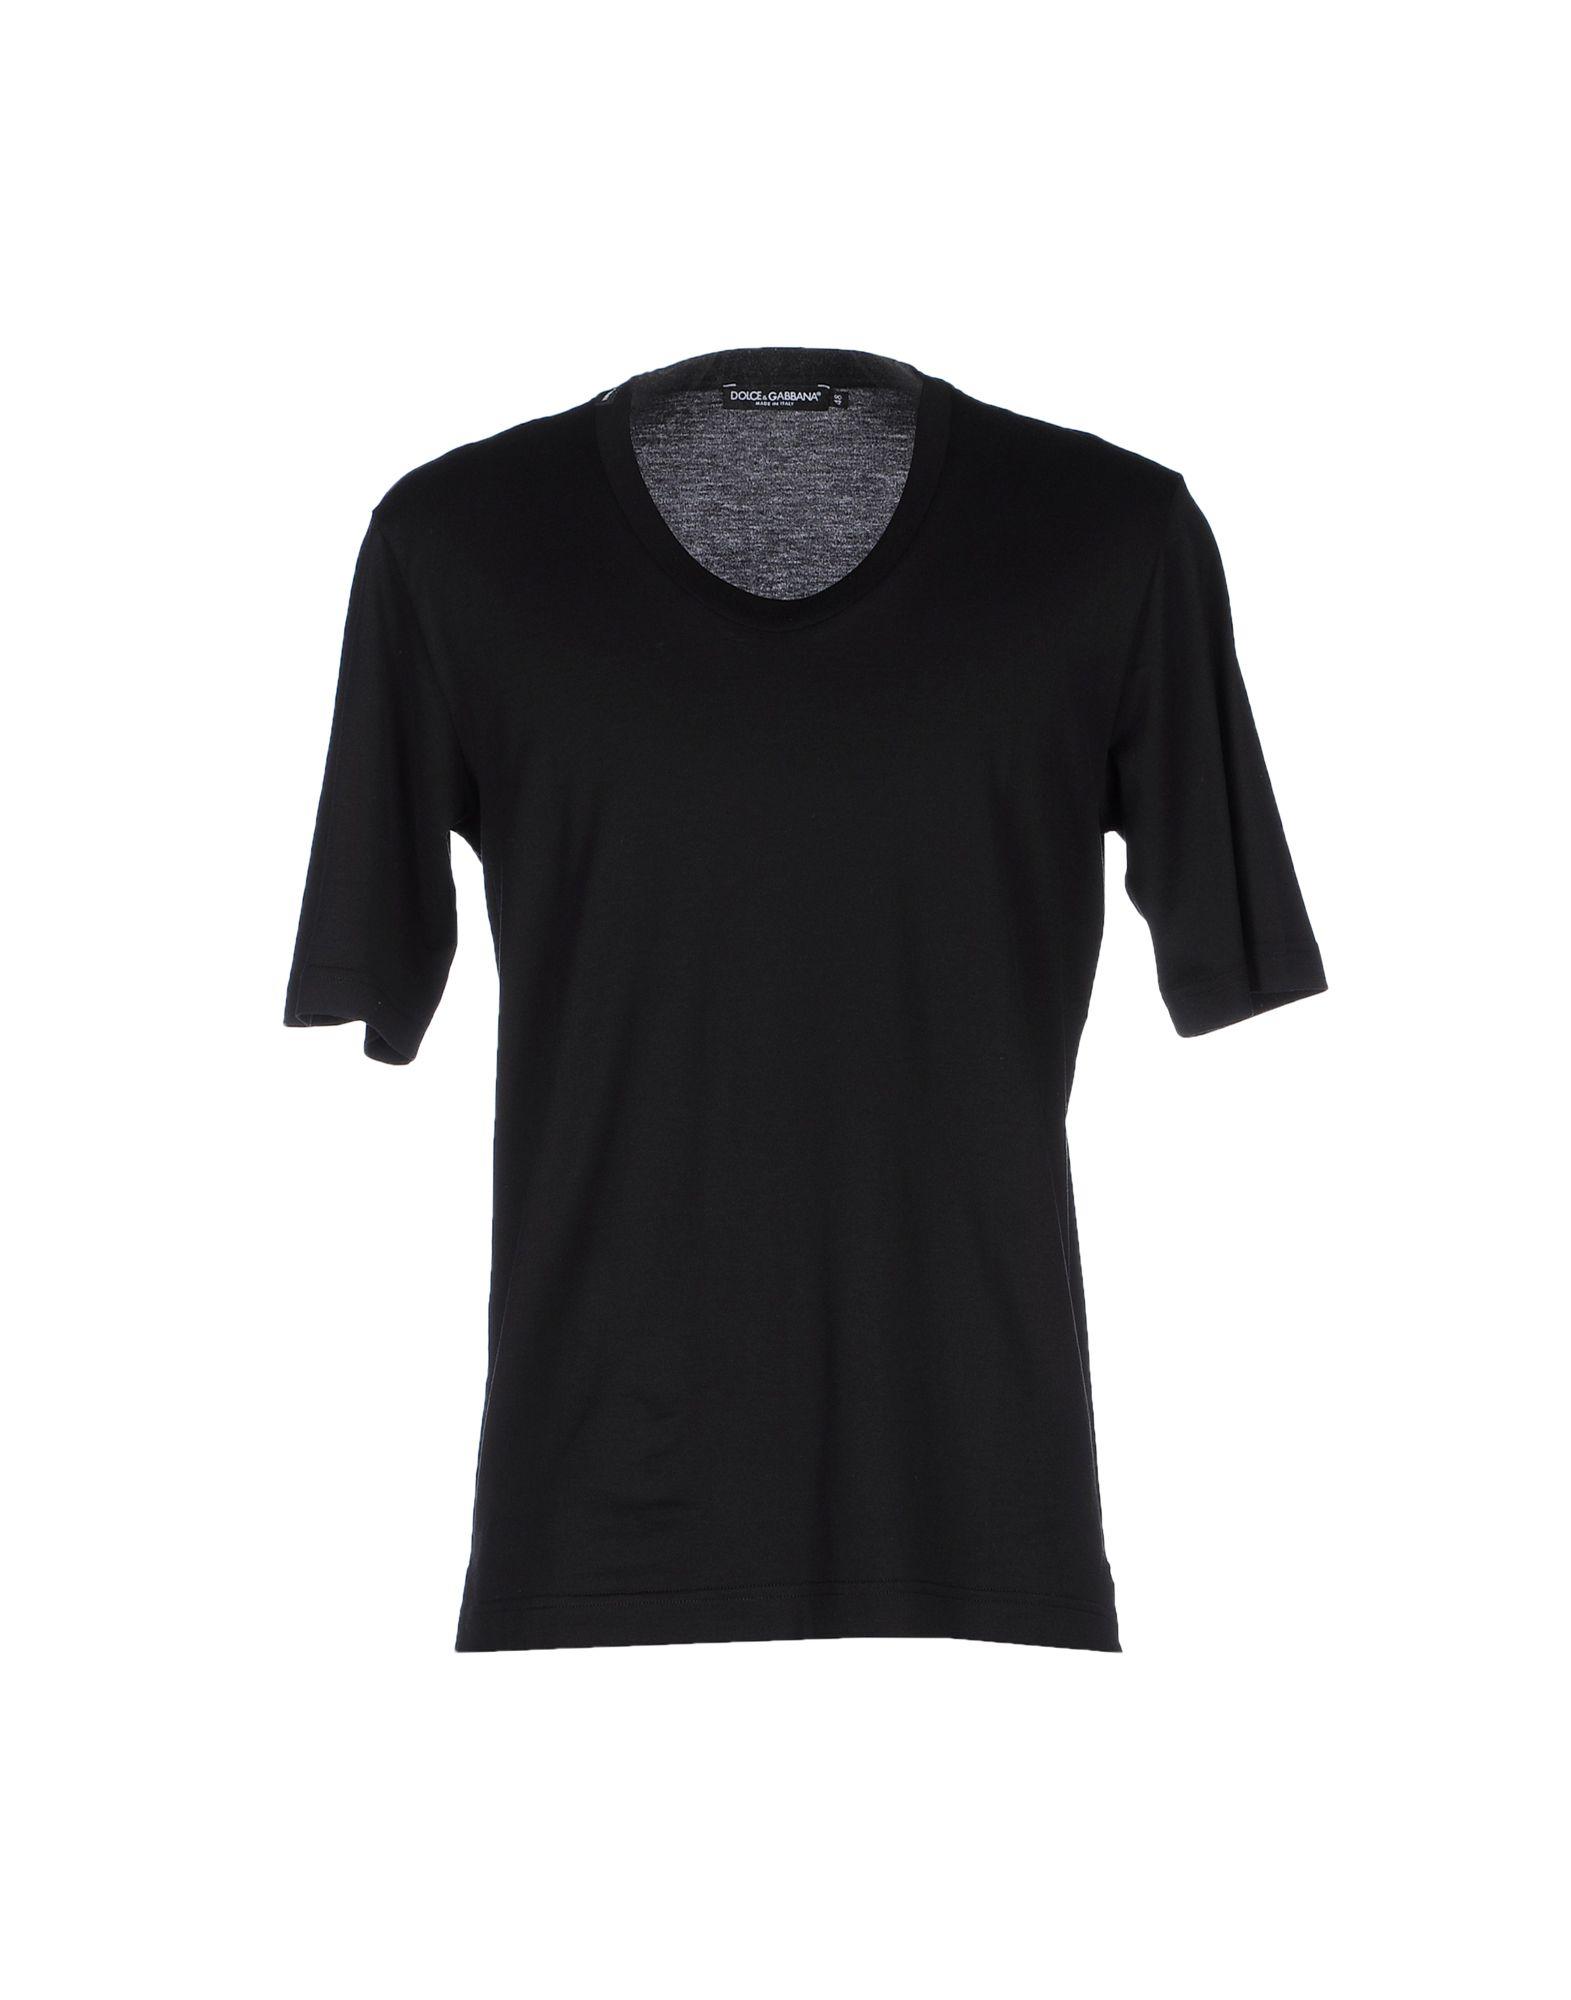 Lyst - Dolce & gabbana T-shirt in Black for Men